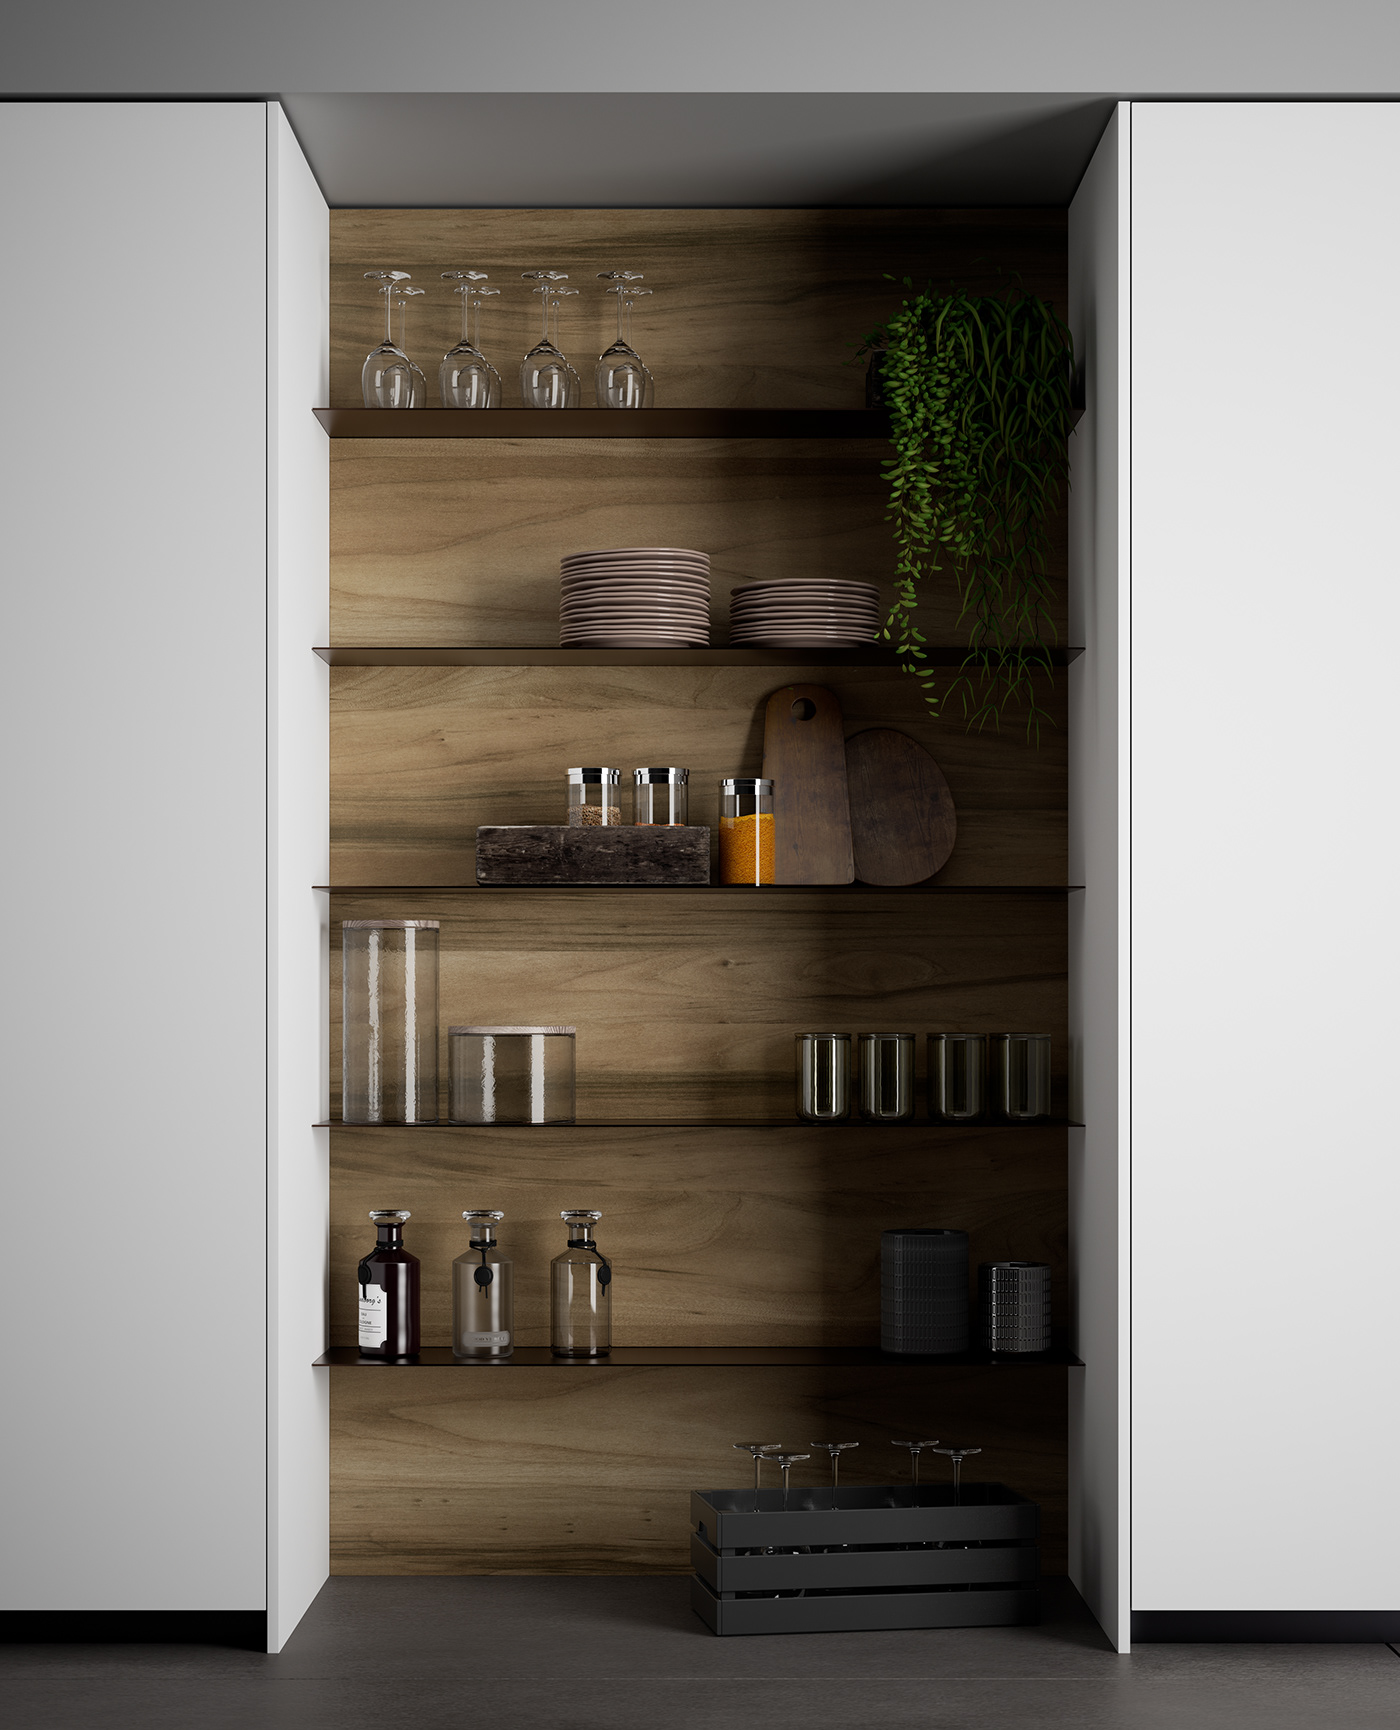 Behance design inspiration 2020 Interior kitchen living maverickrender minimal new rendering